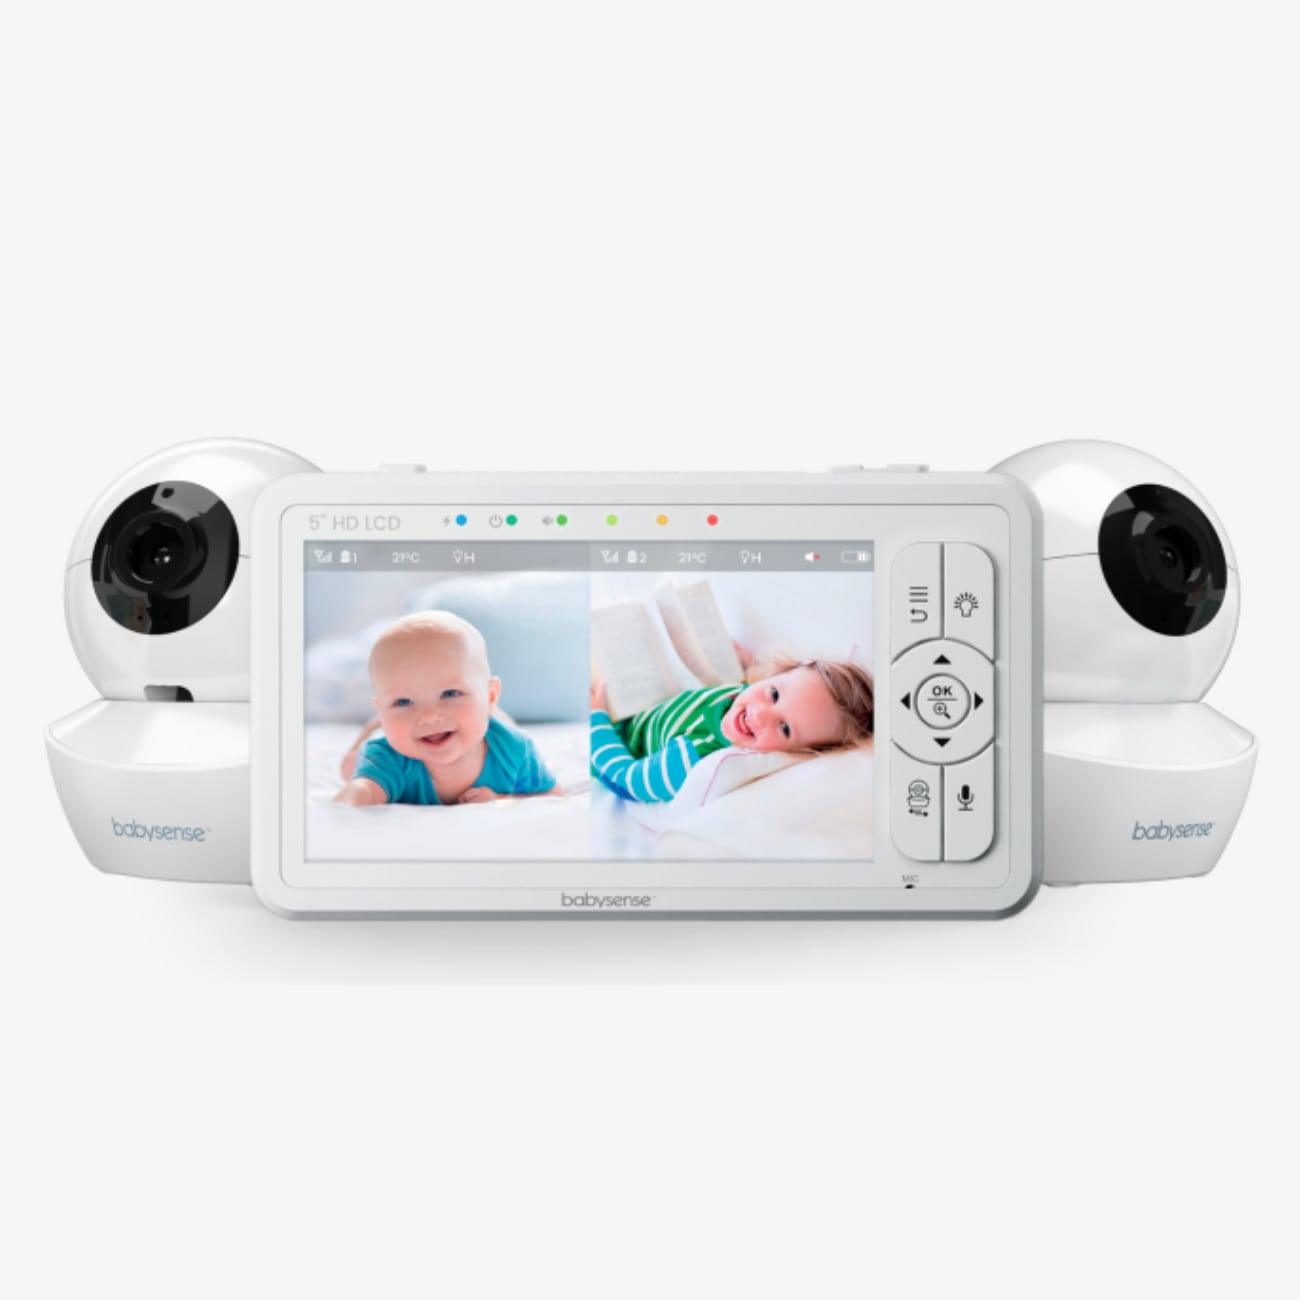 Babyphone babysense 2 caméras - Babysense